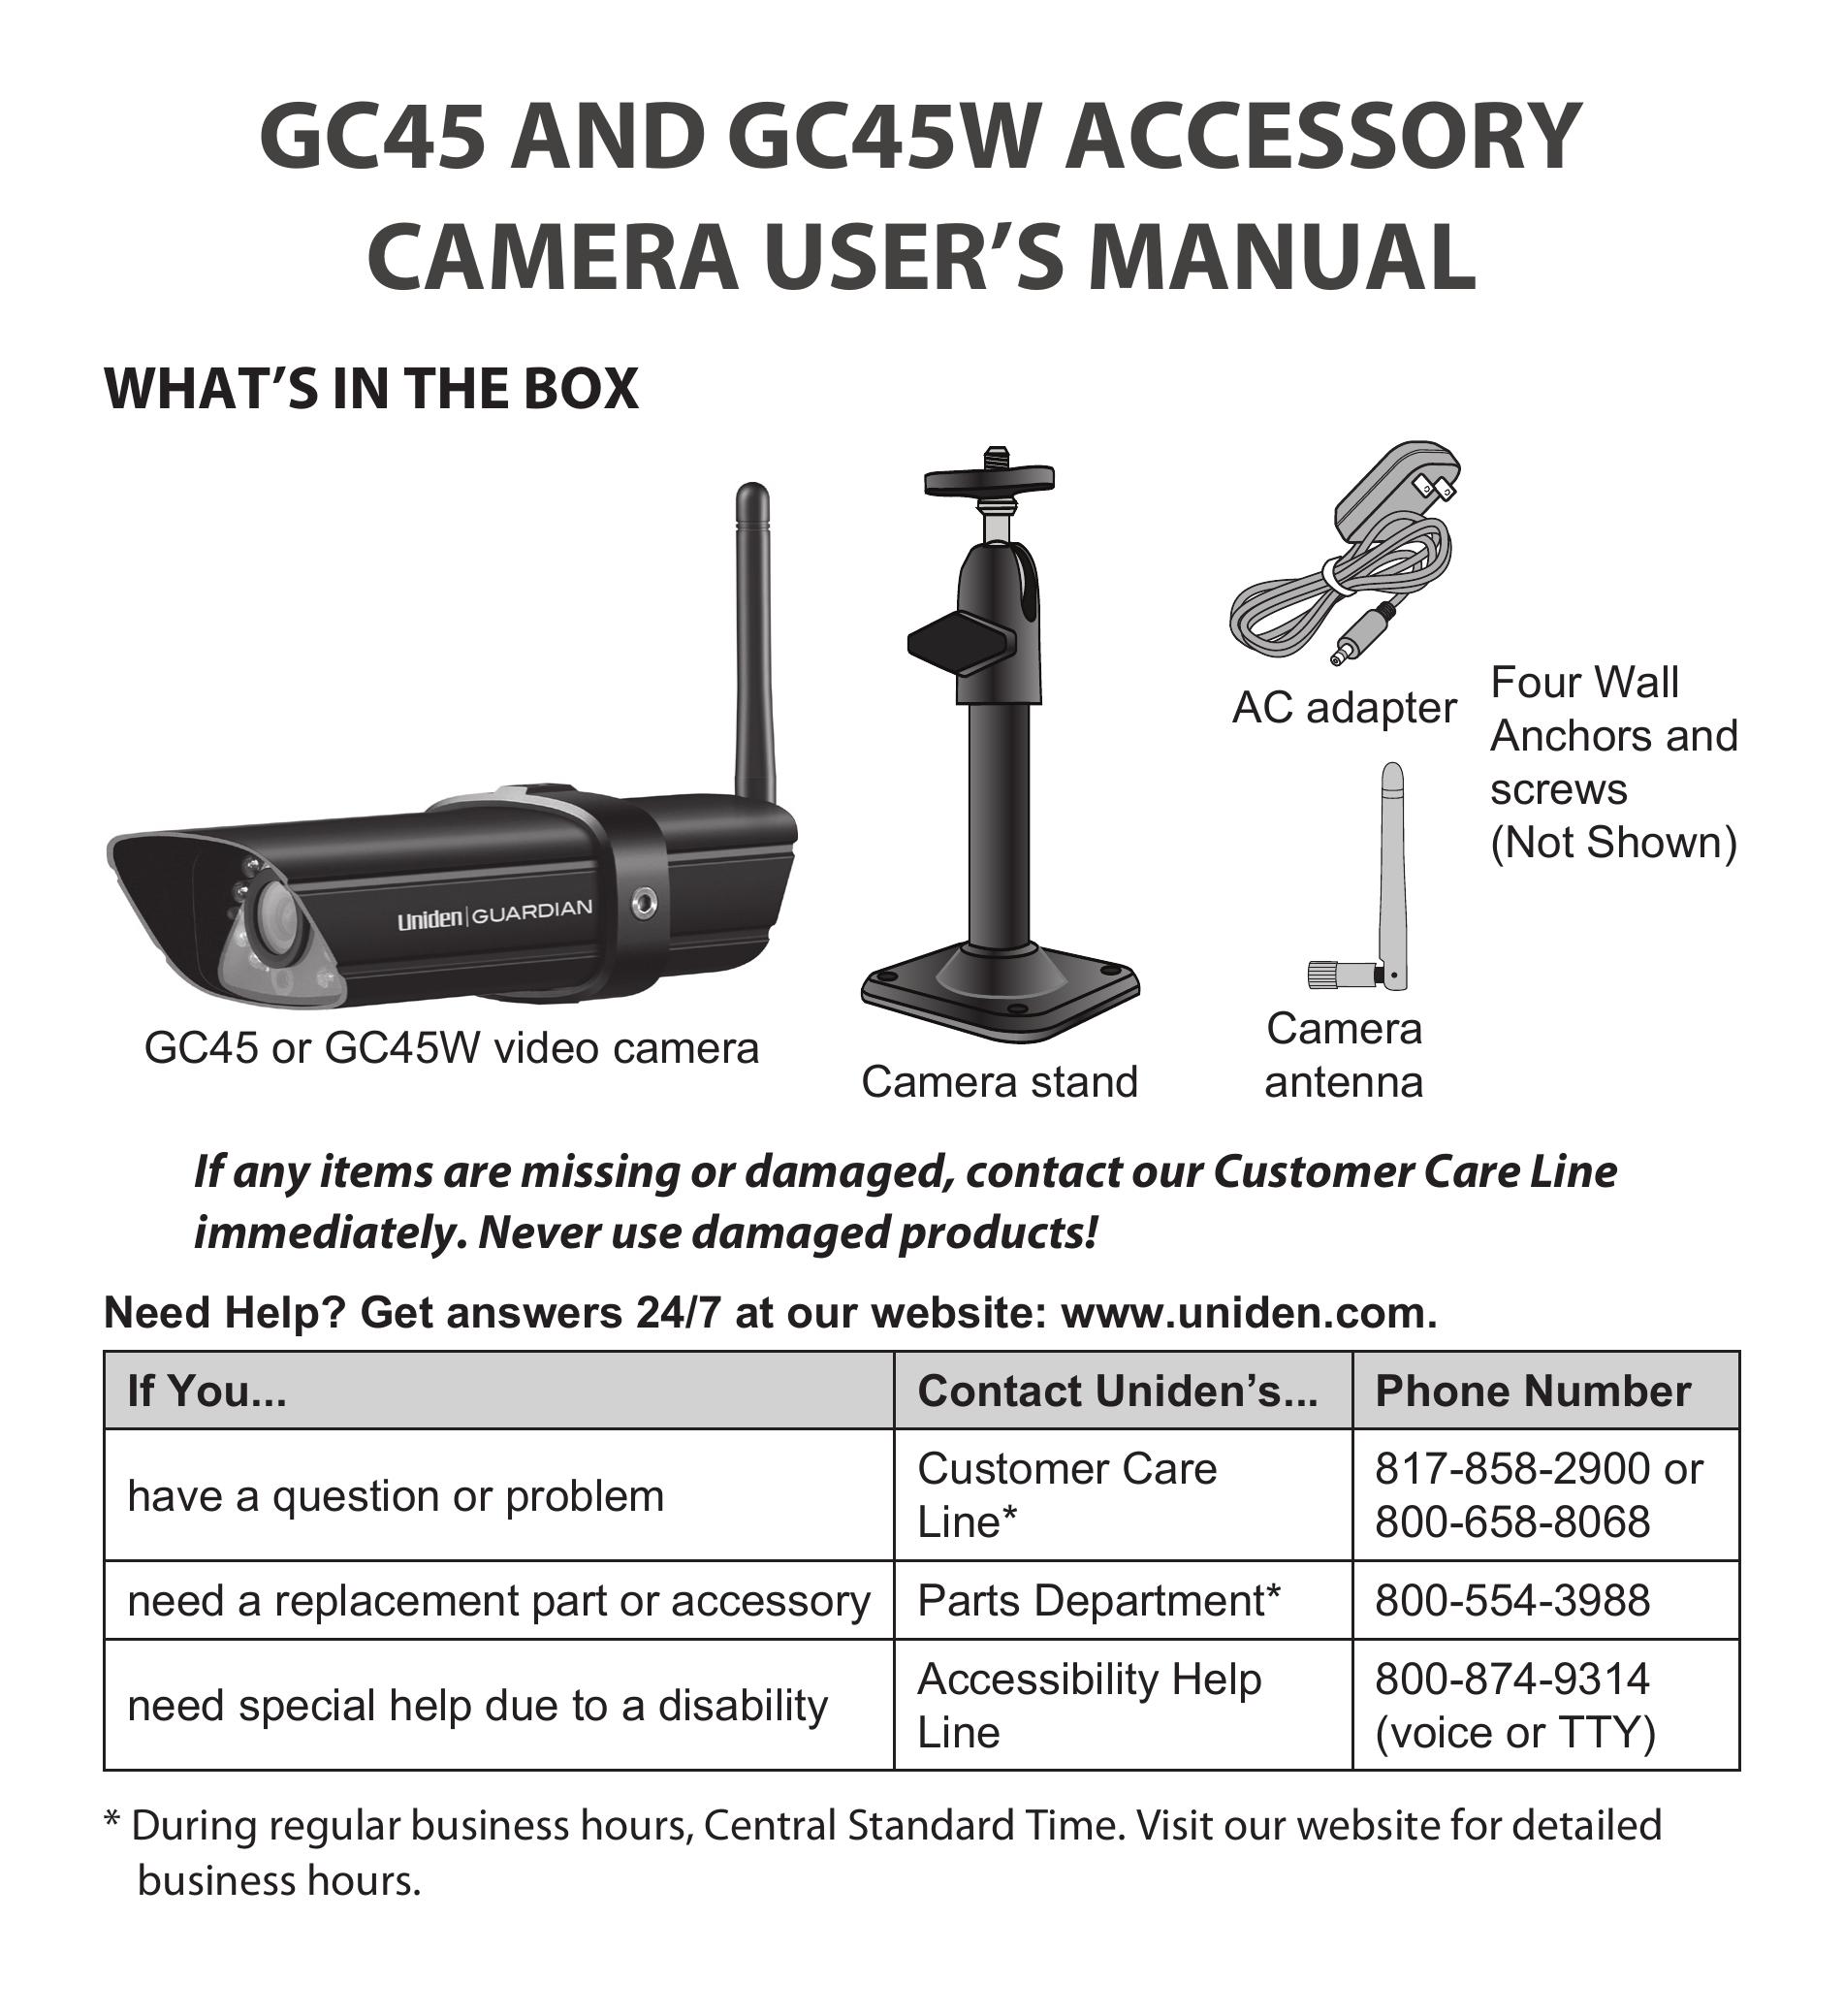 Uniden GC45 Security Camera User Manual